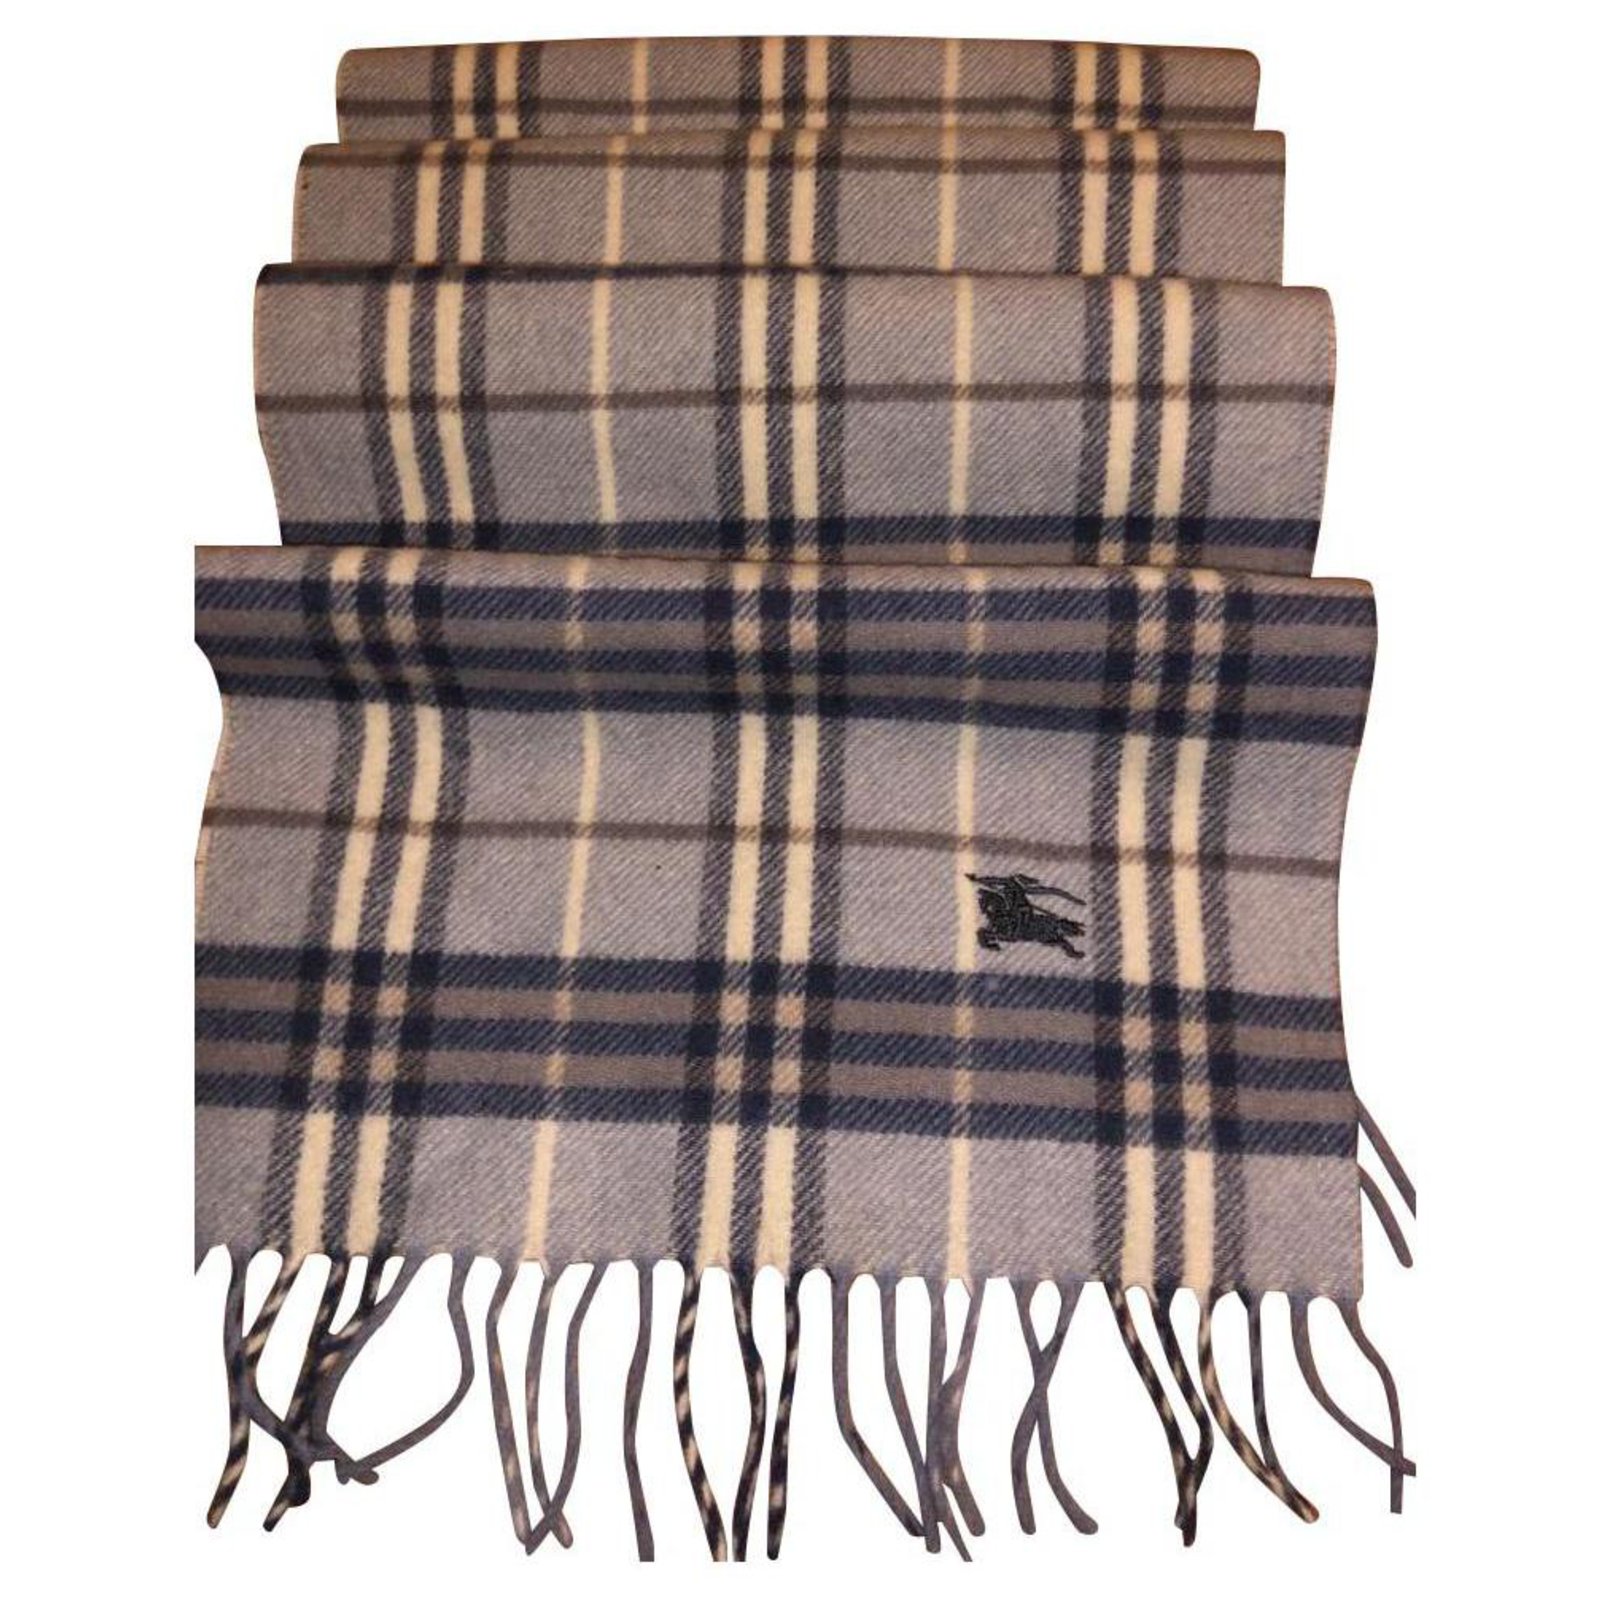 unisex burberry scarf